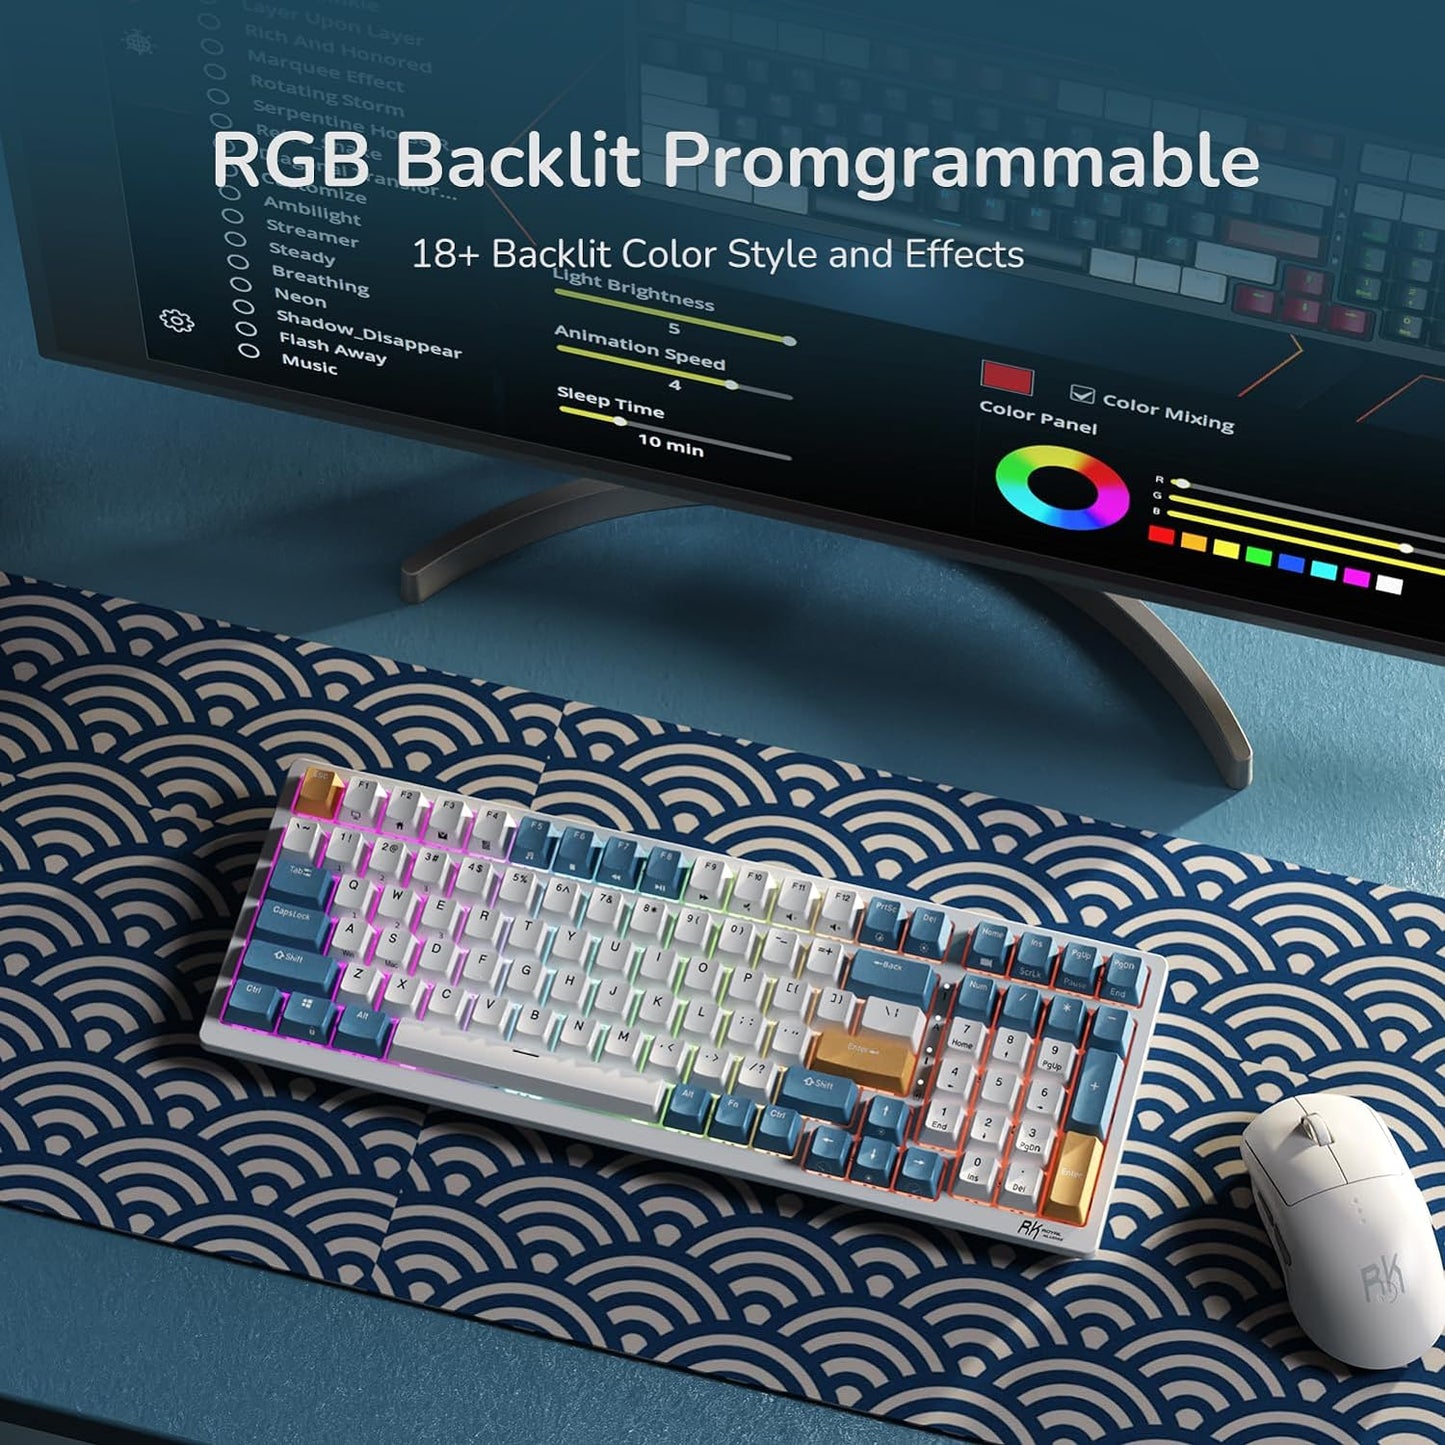 Royal Kludge RK98 - 98% Wireless/Wired Mechanical RGB Gaming Keyboard